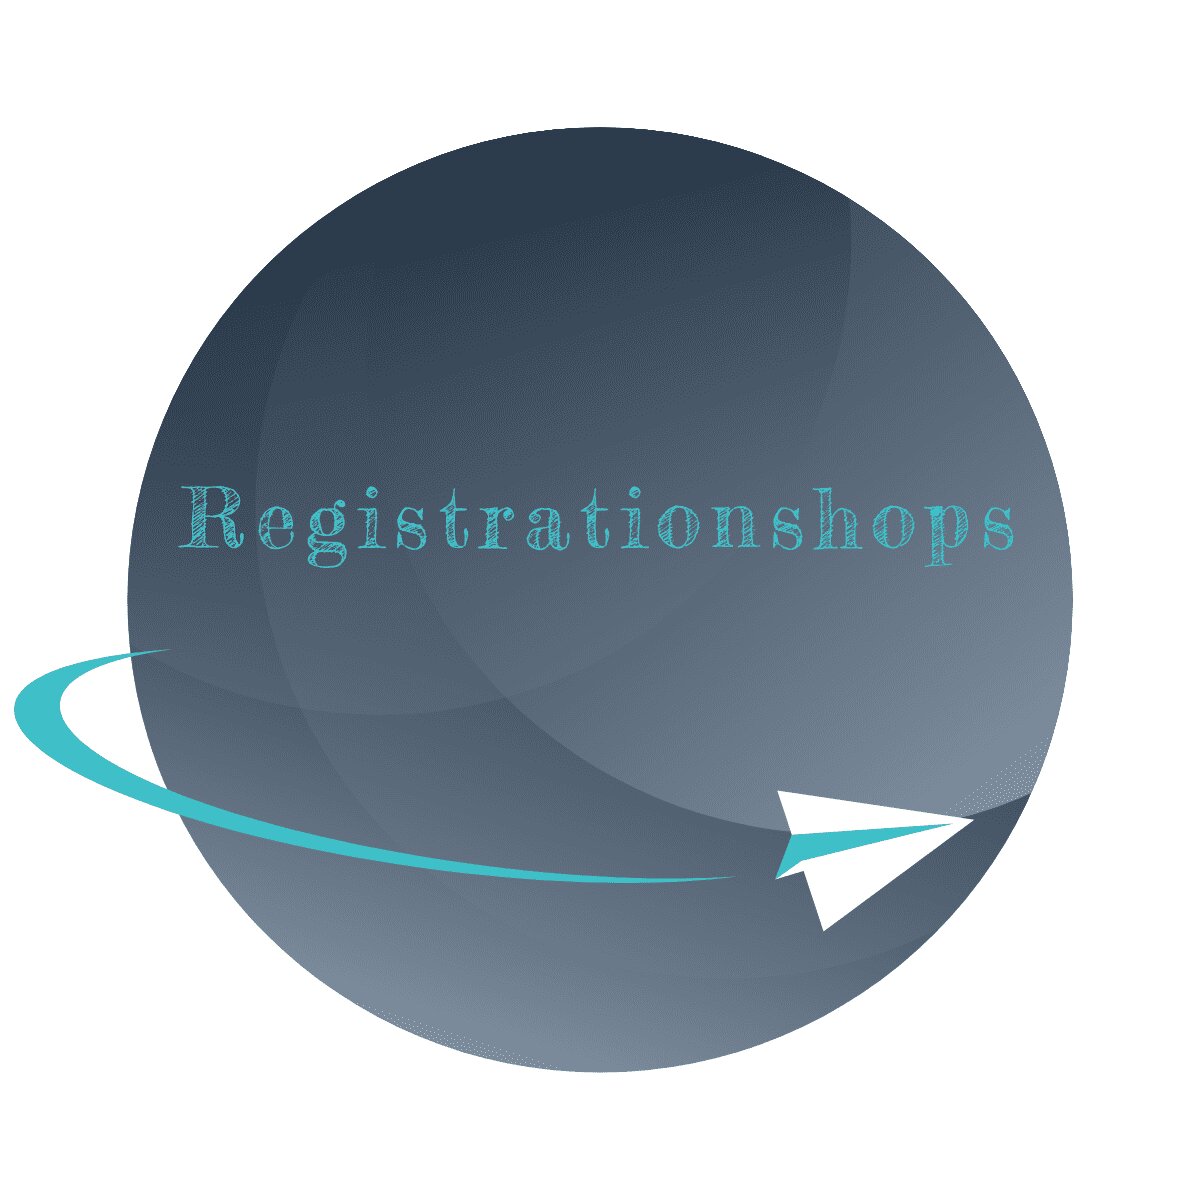 Registrationshops Business Consultancy services